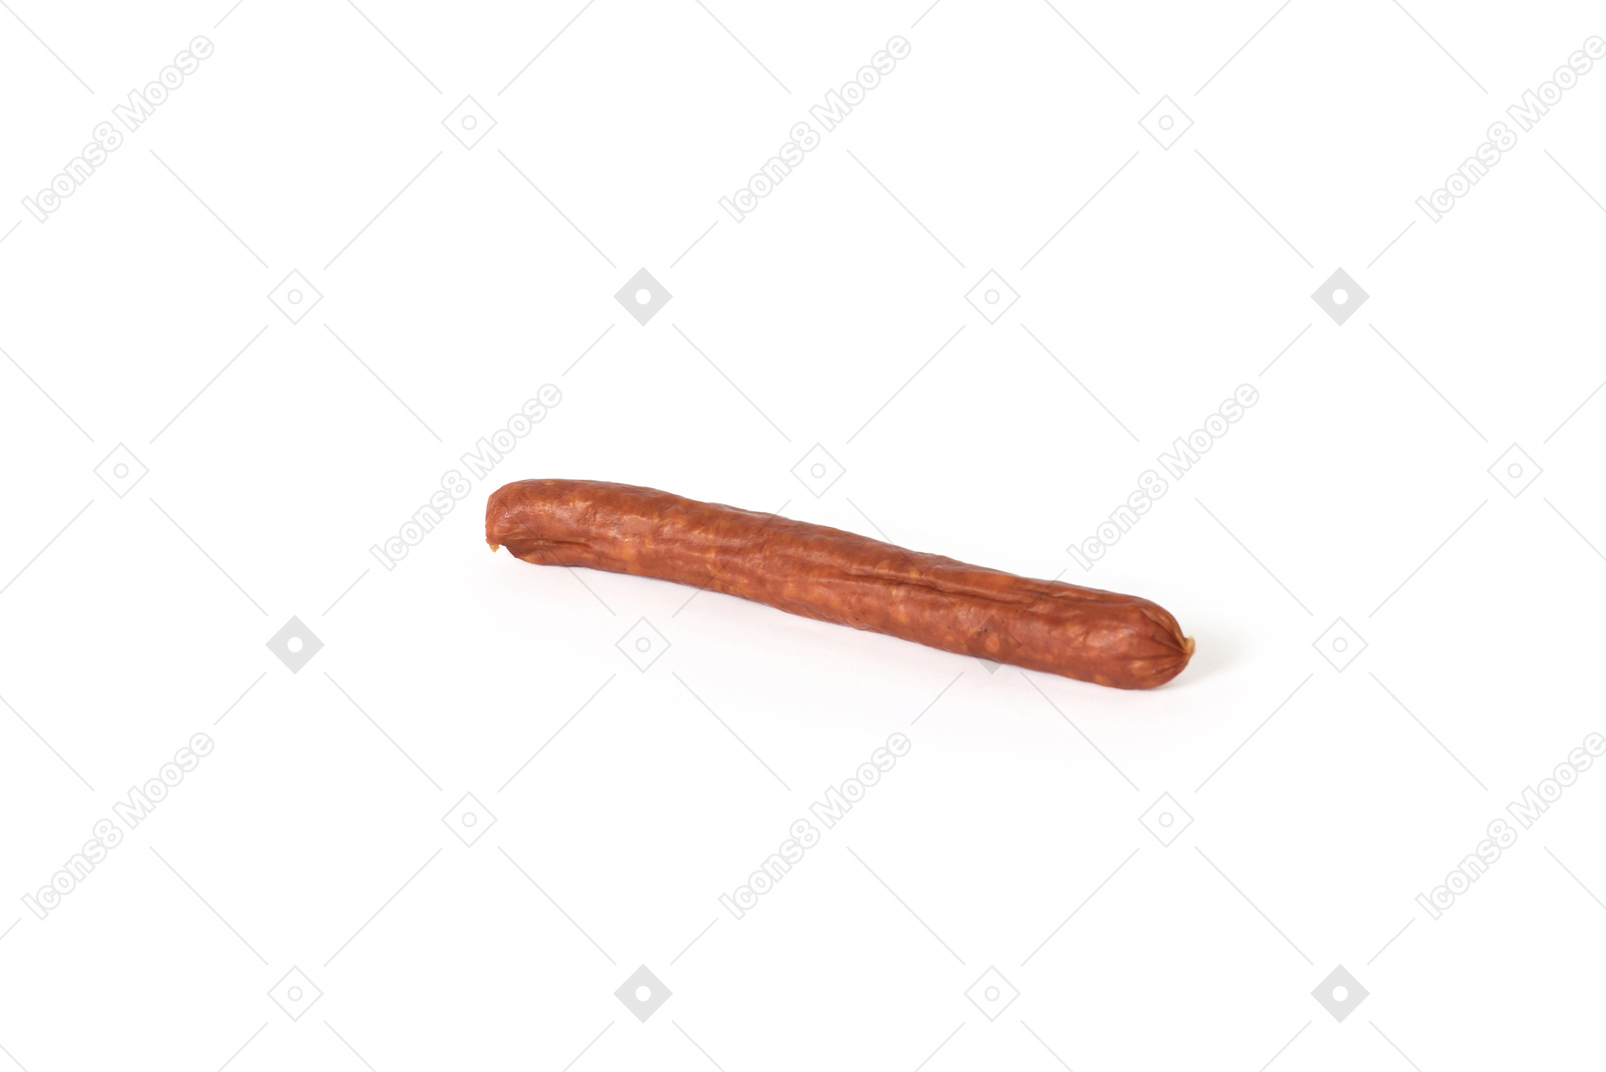 Sausage on white background